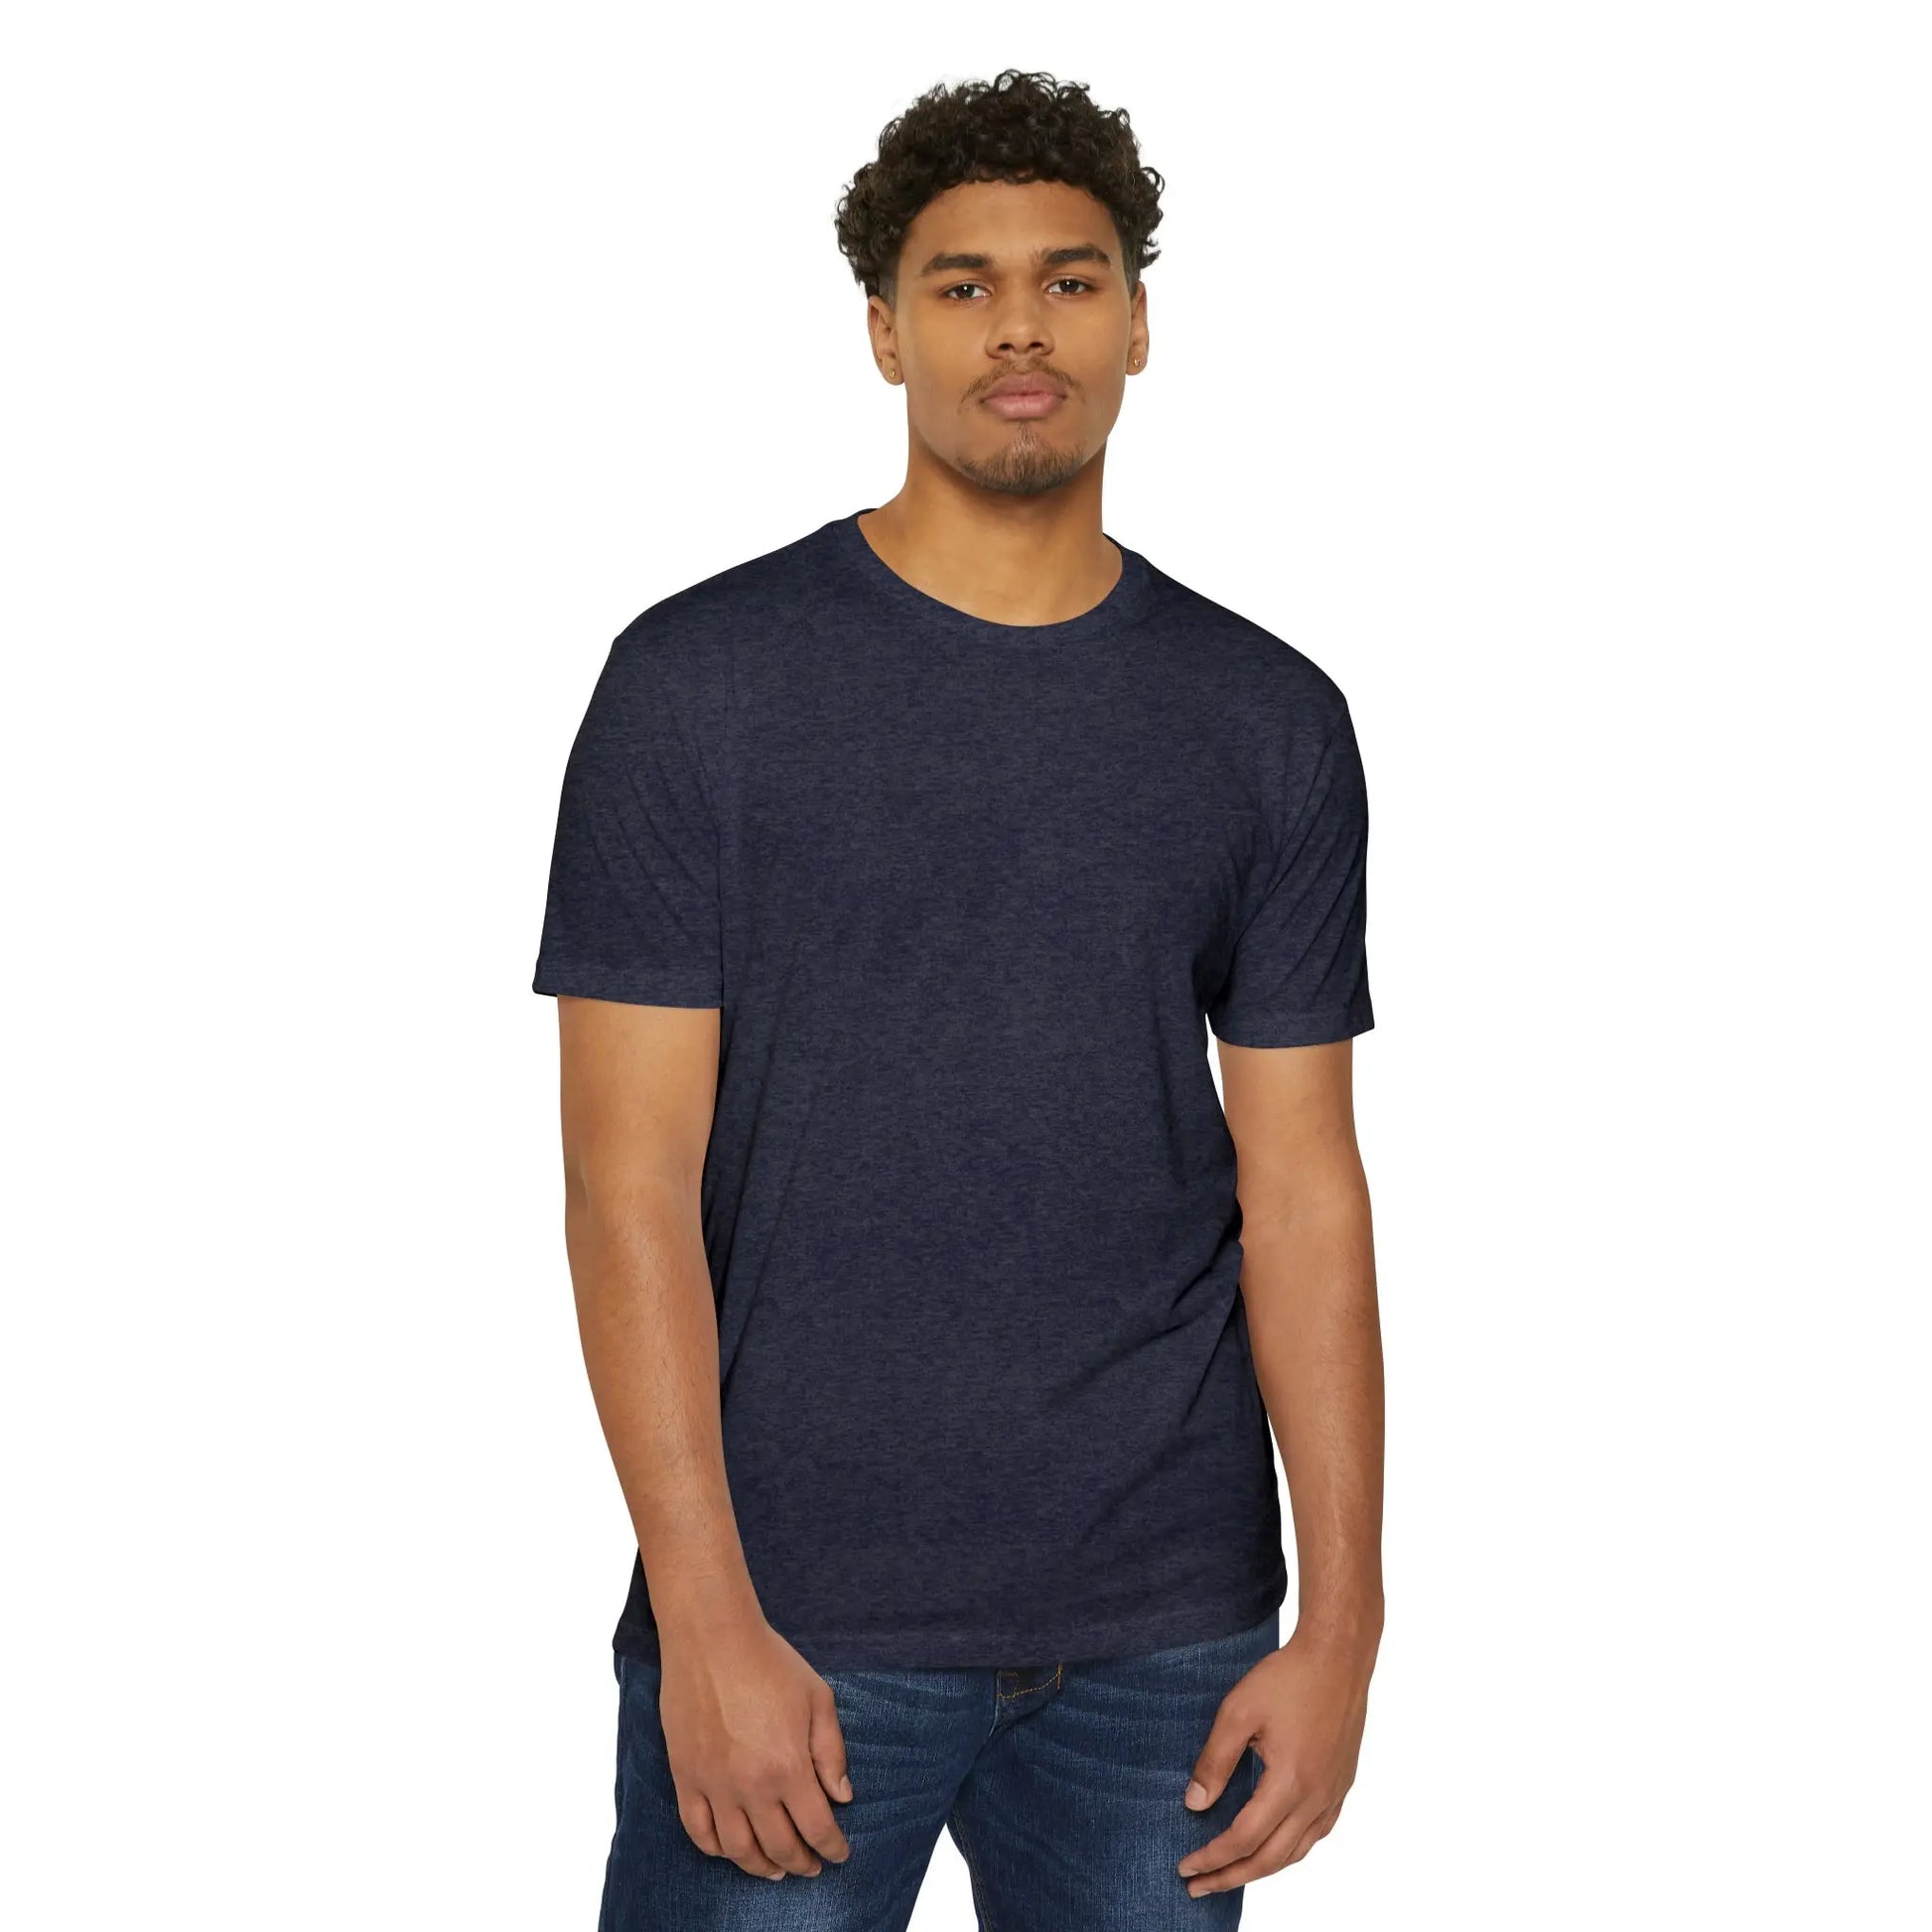 Unisex CVC Jersey T-shirt BE - An Initial Impression